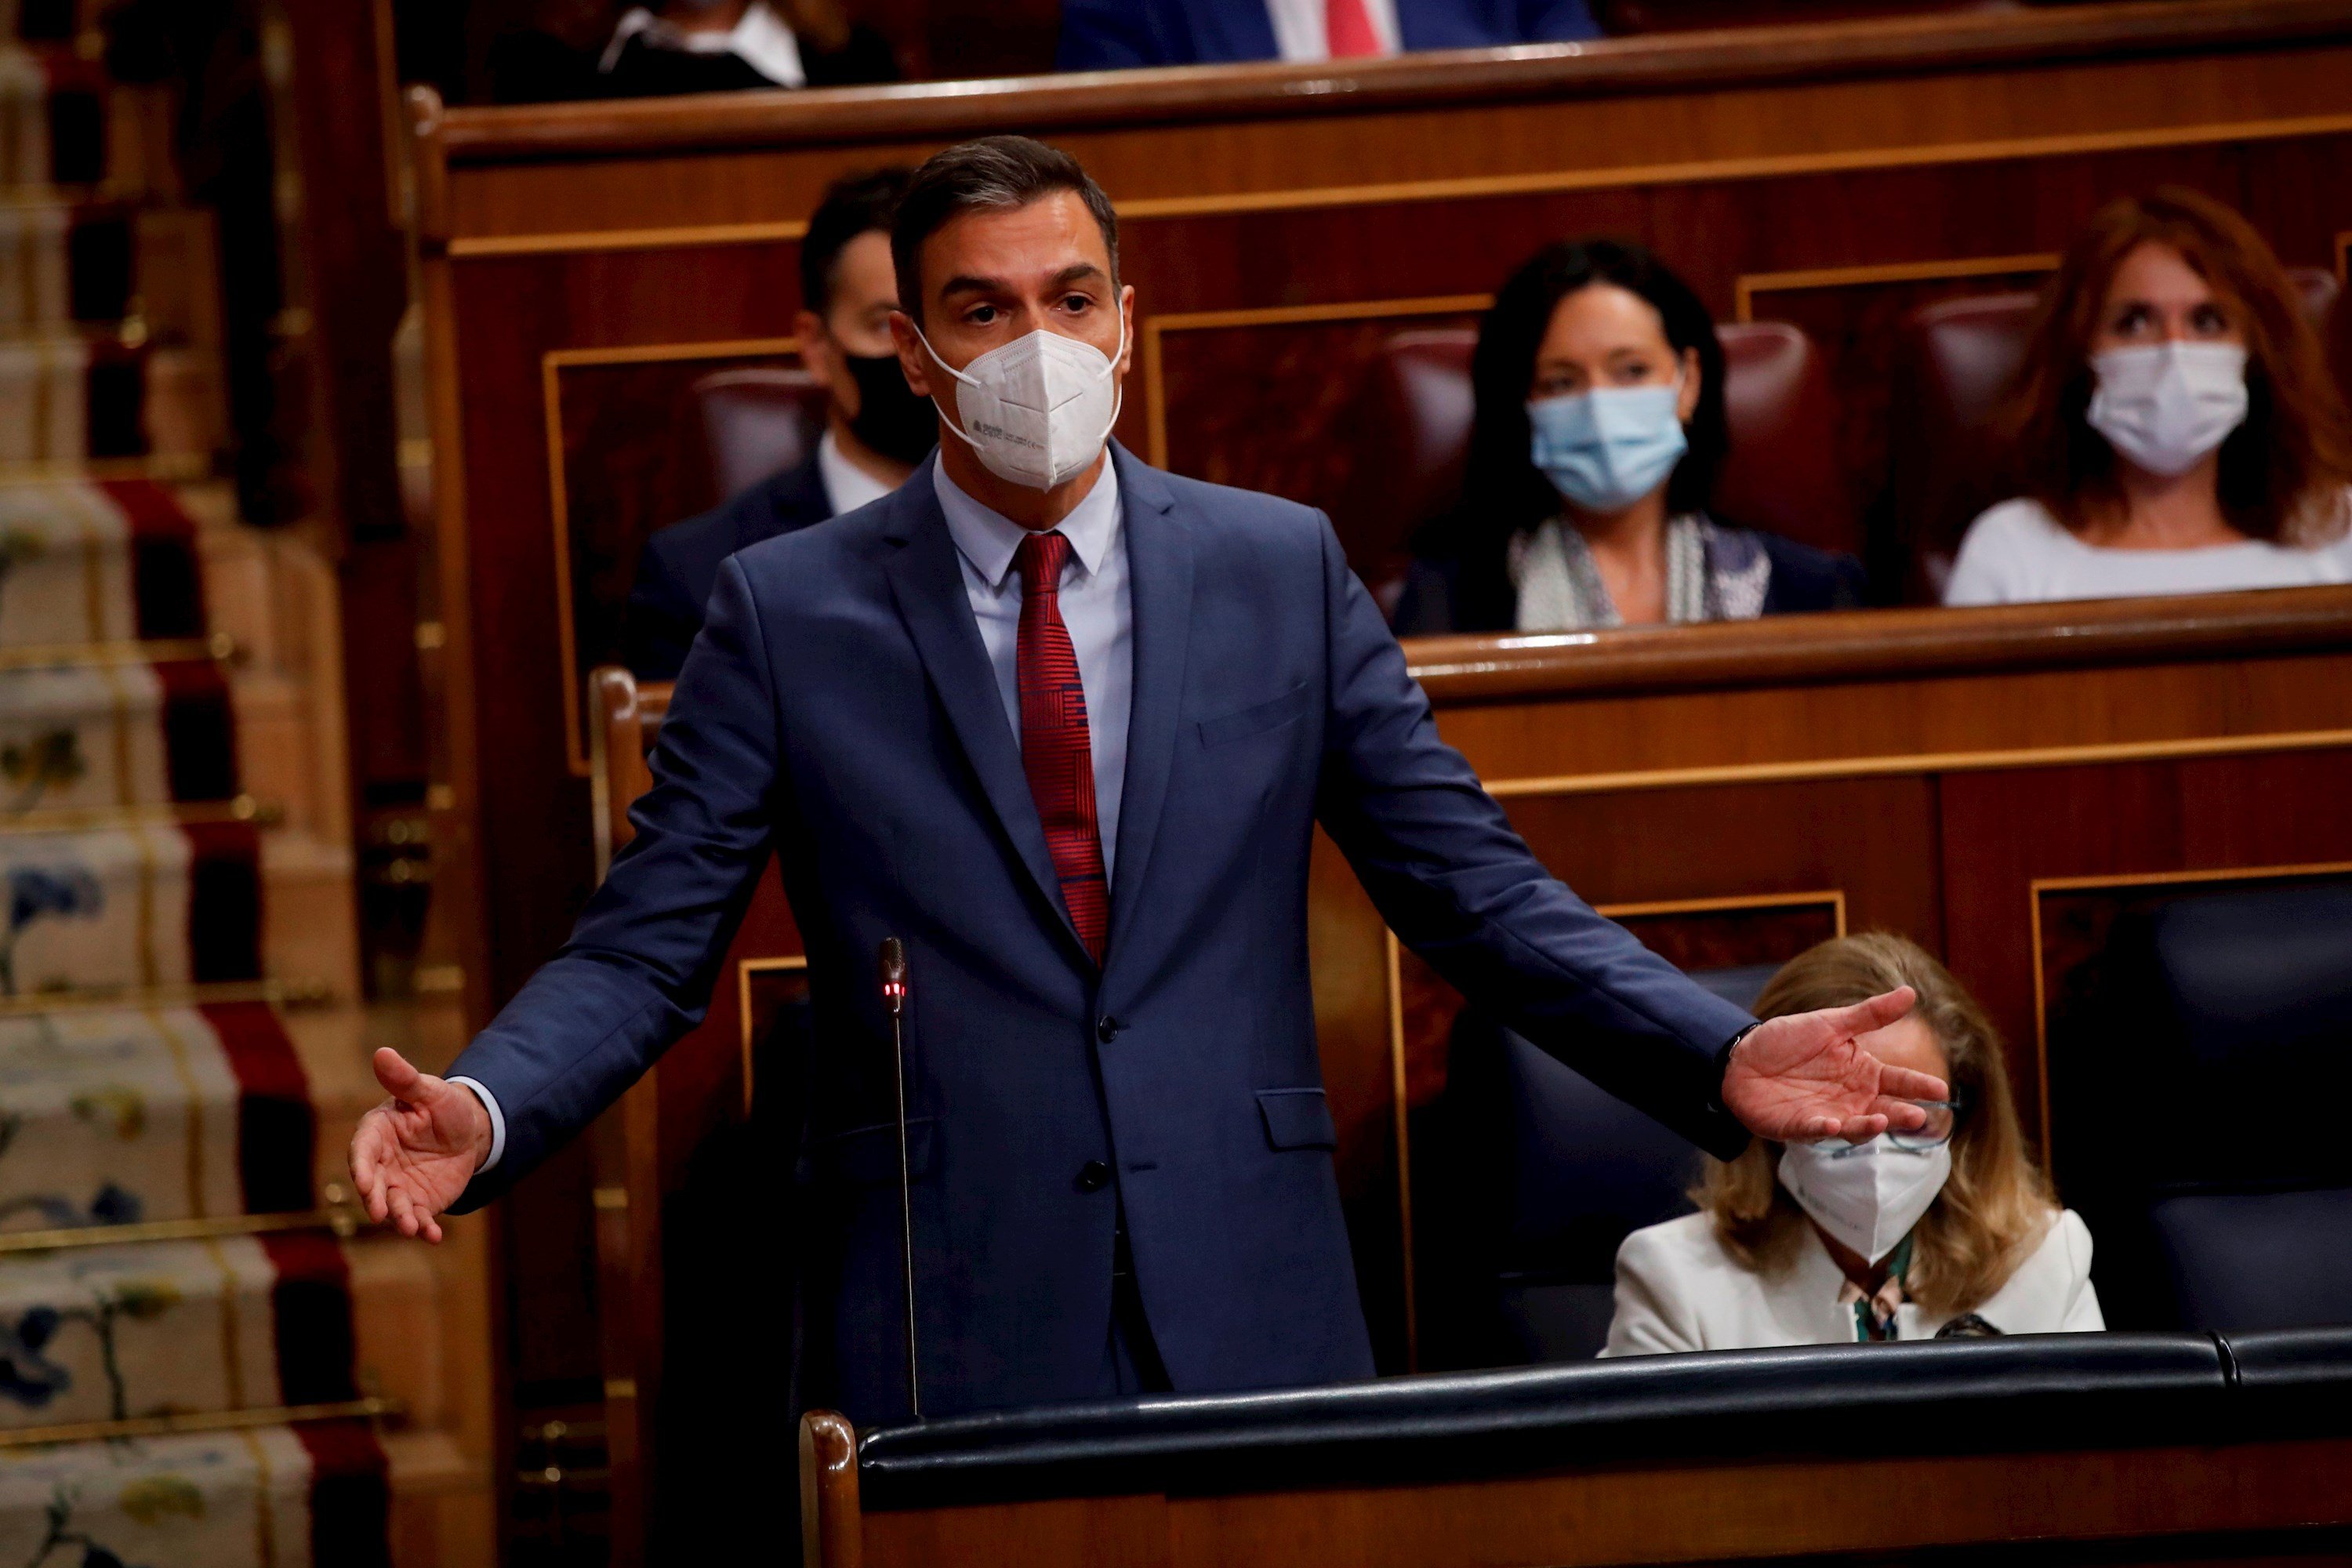 Pedro Sánchez evades question on Puigdemont arrest, accusing Junts of 'conspiranoia'